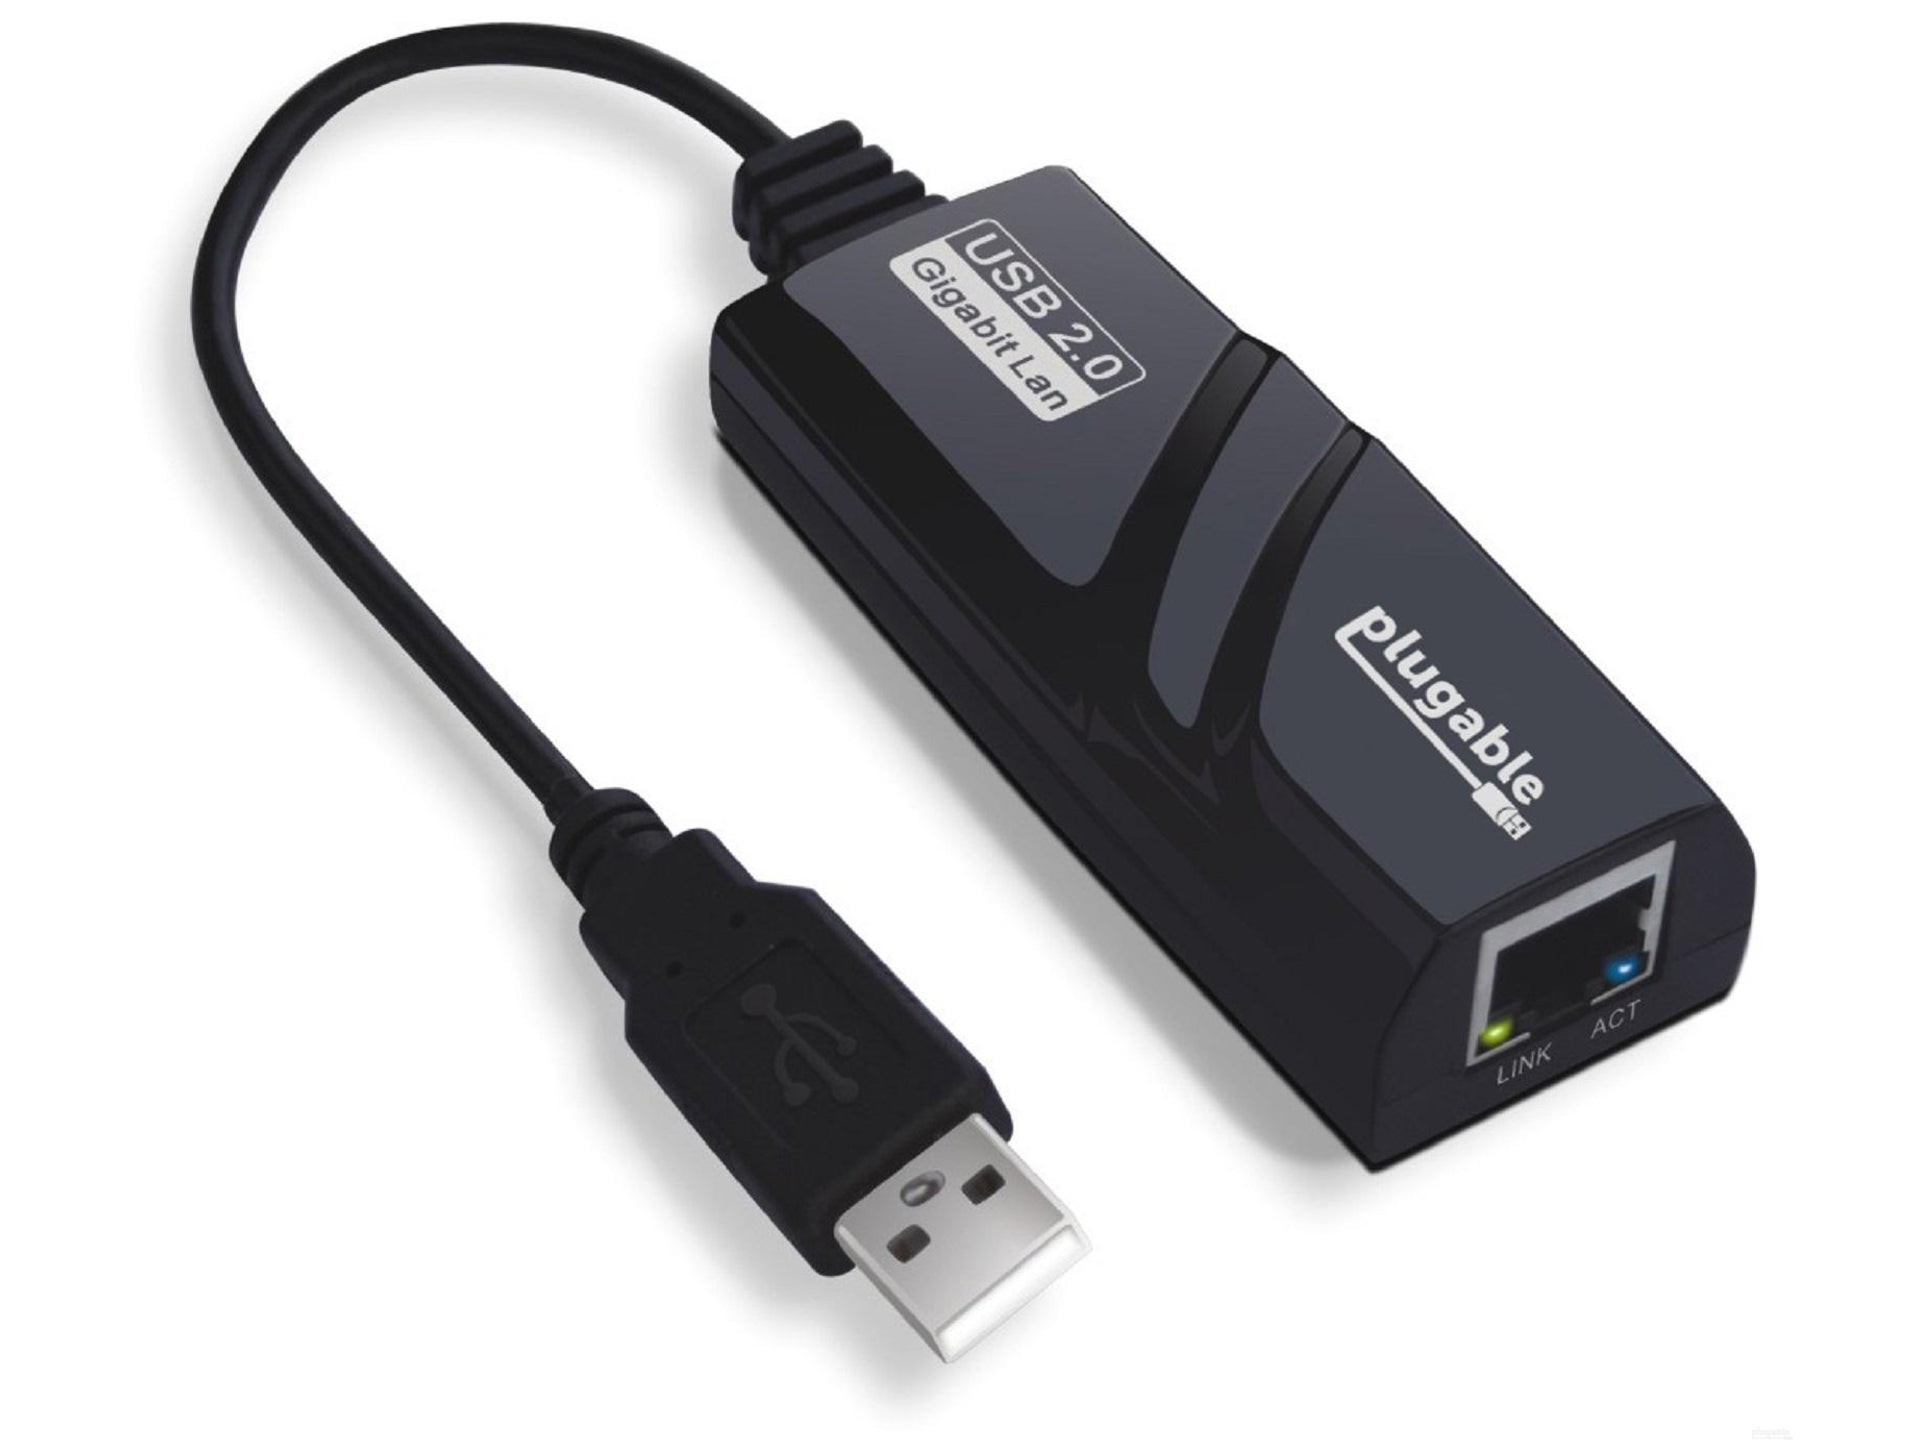 HUB USB 3.0 à 3 ports vers RJ45 Gigabit Ethernet Adaptateur Ethernet USB  10/100/1000